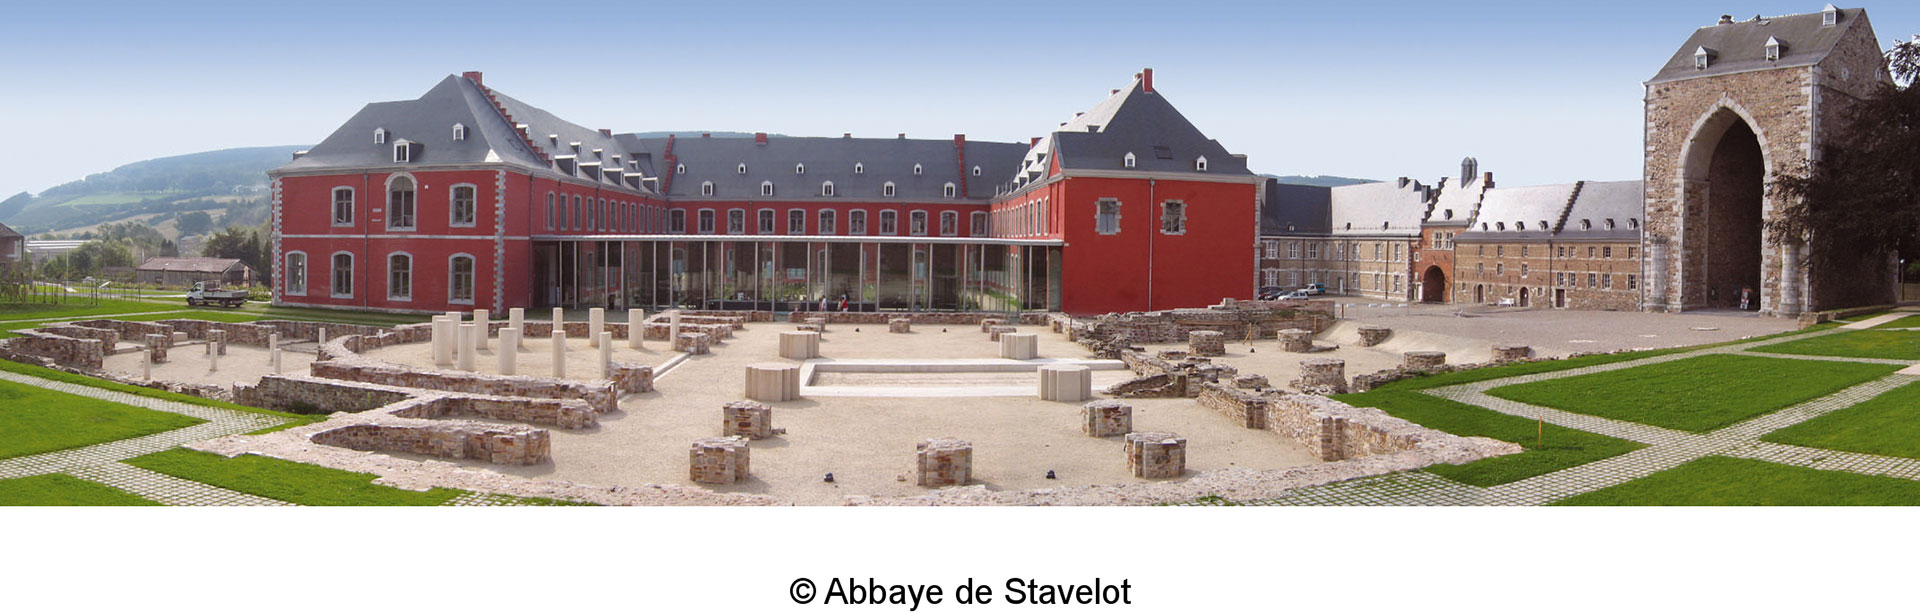 Abbey - Stavelot - Space - Tourism - Culture - Secret Wallonia